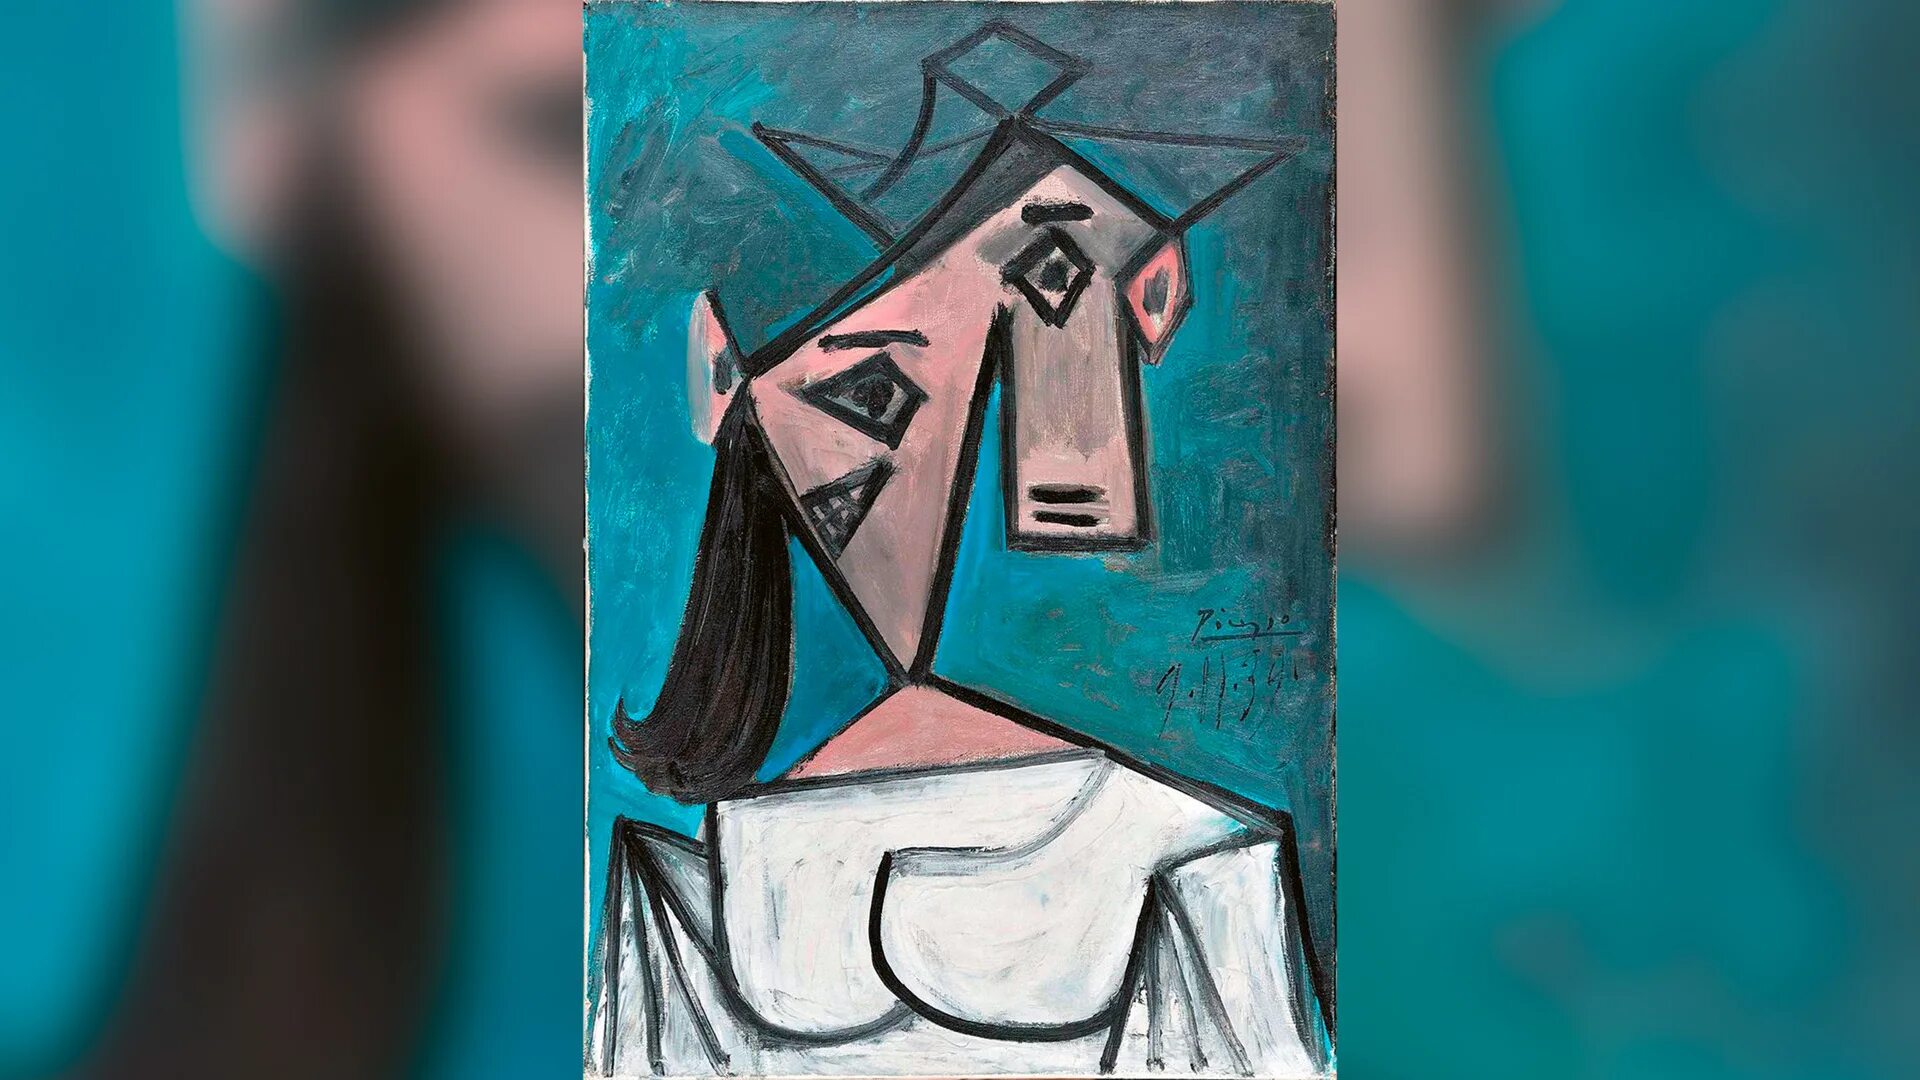 Пабло Пикассо картины. Украденные картины Пикассо. Голова женщины Пикассо 1939. Пабло Пикассо кубизм. Краденные картины